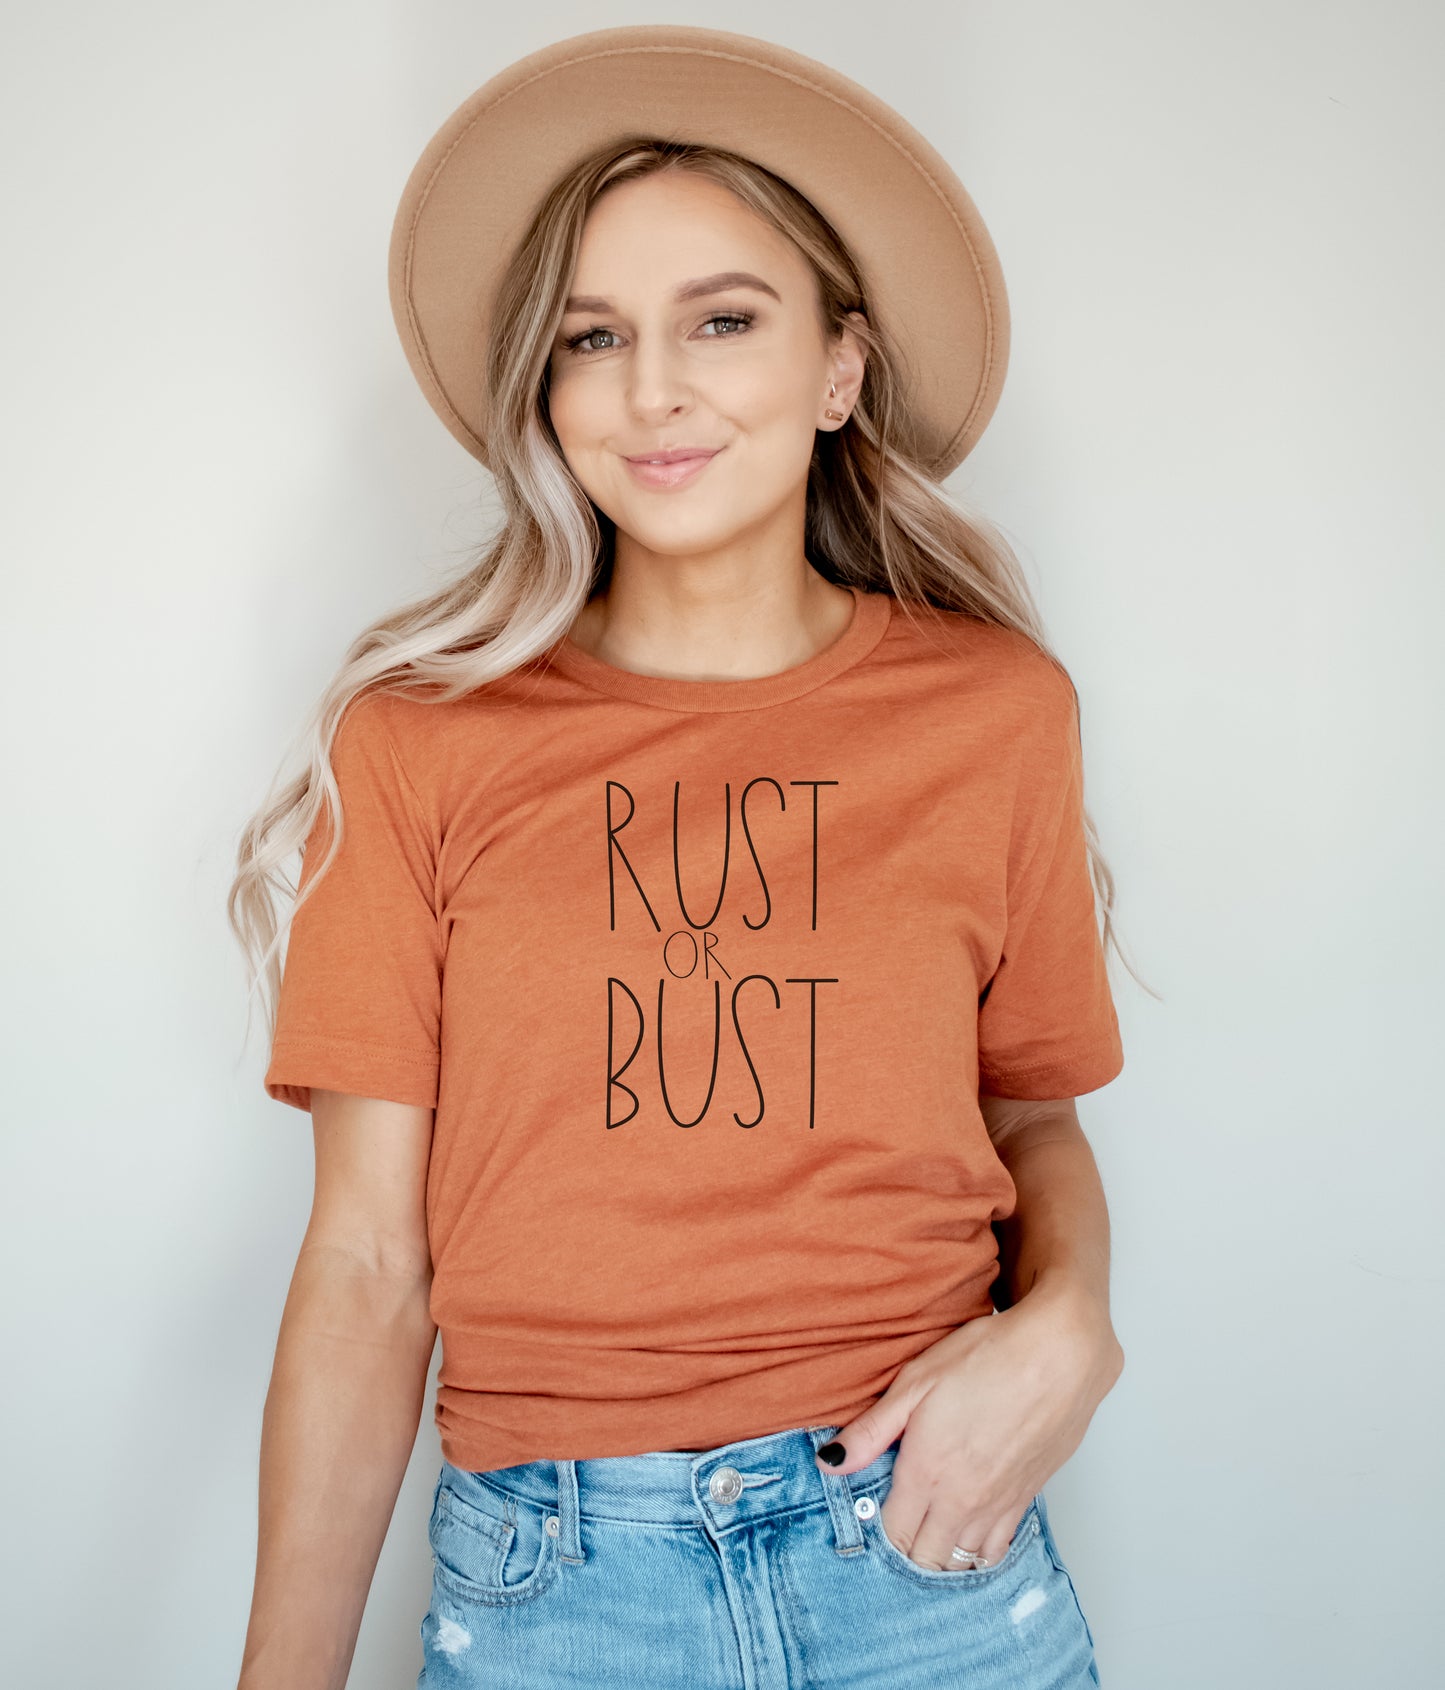 Rust or bust tee shirt